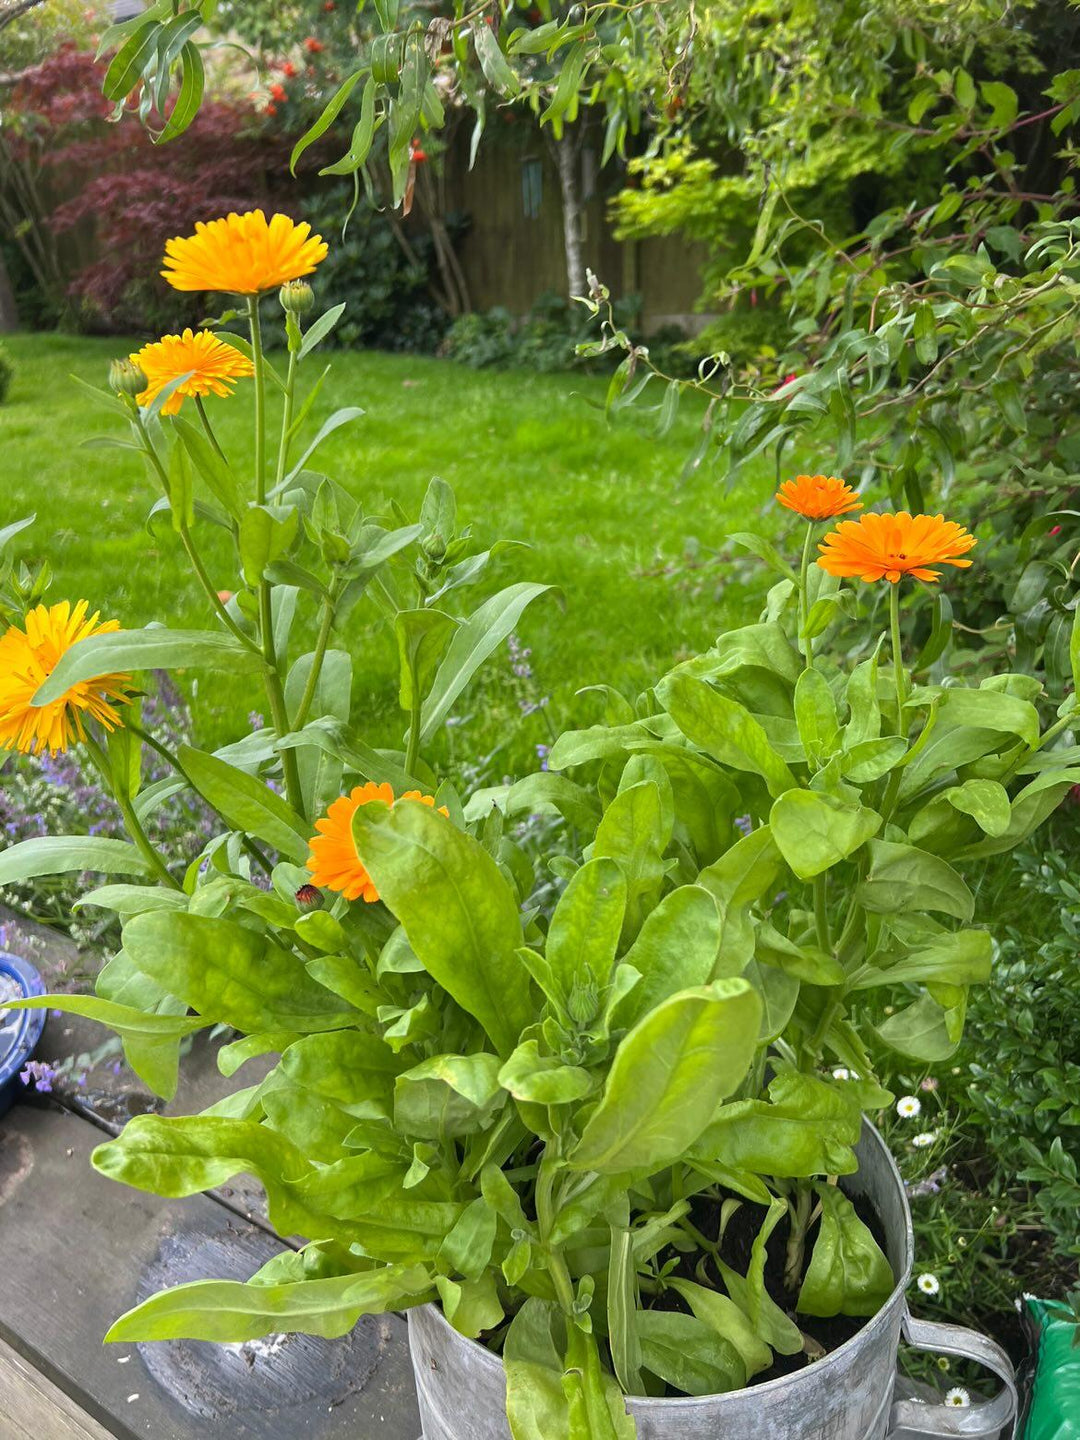 Marigolds grown from organic edible flower seeds